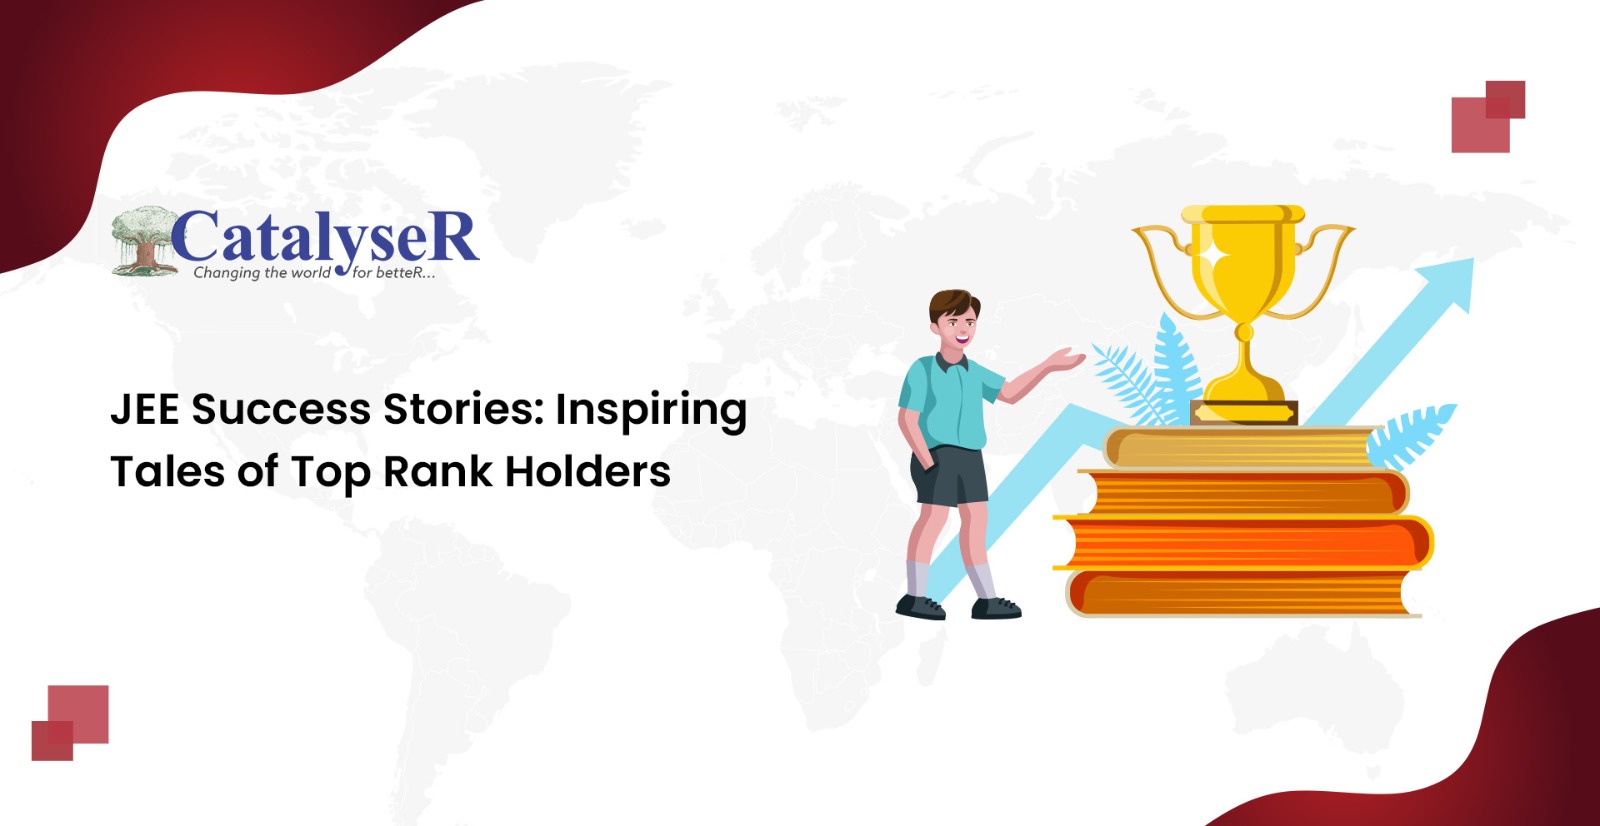 JEE Success Stories: Inspiring Tales of Top Rank Holders